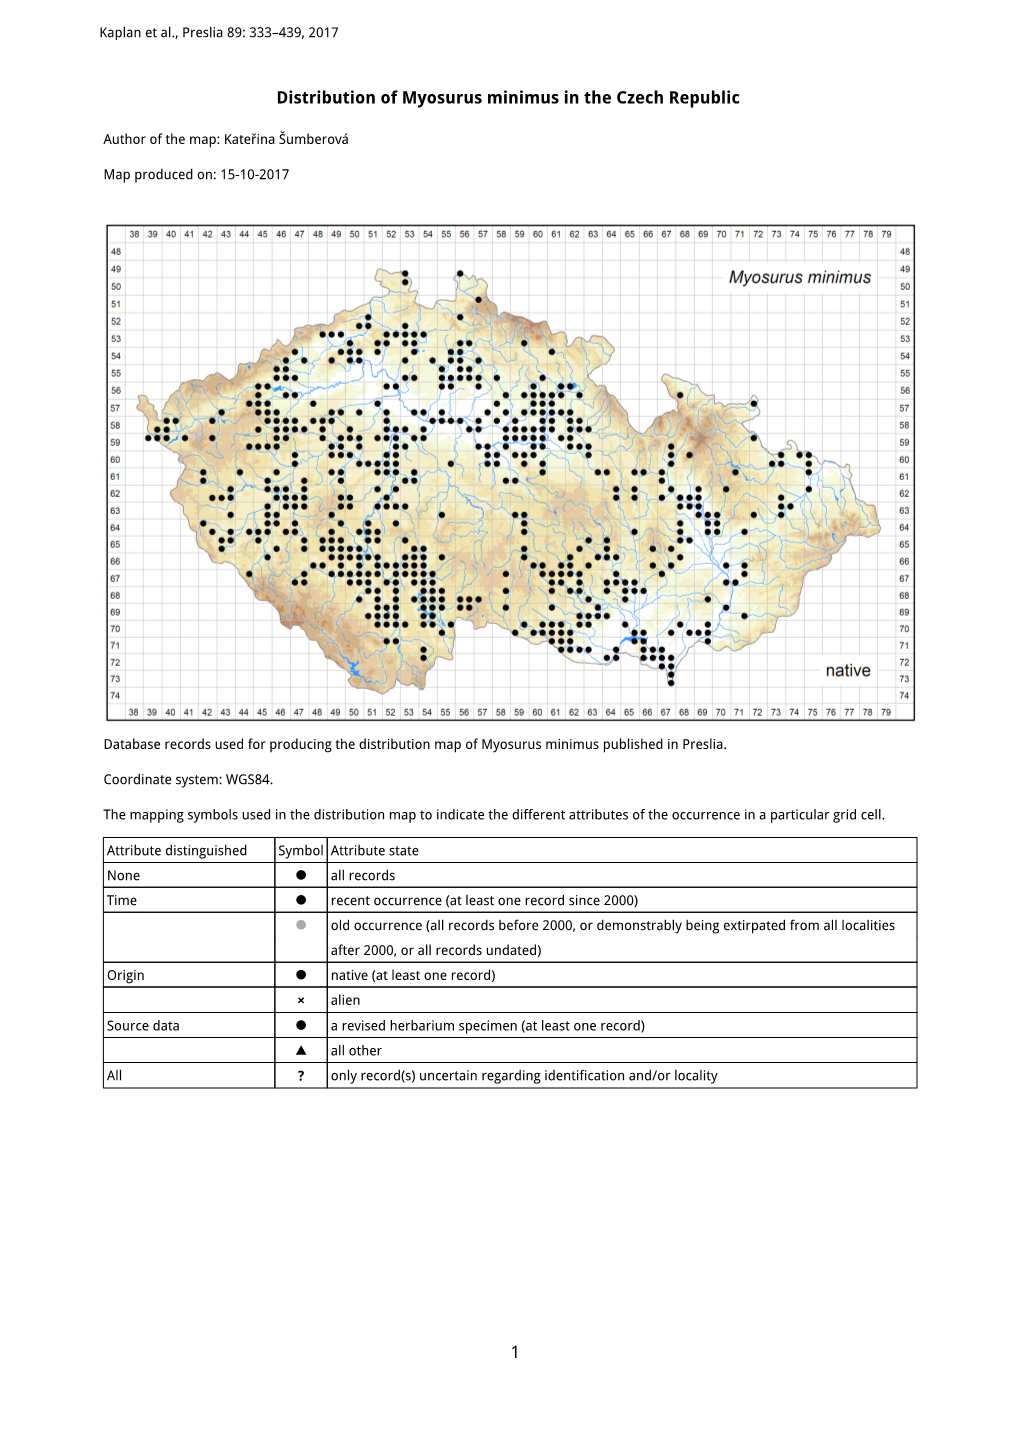 1 Distribution of Myosurus Minimus in the Czech Republic